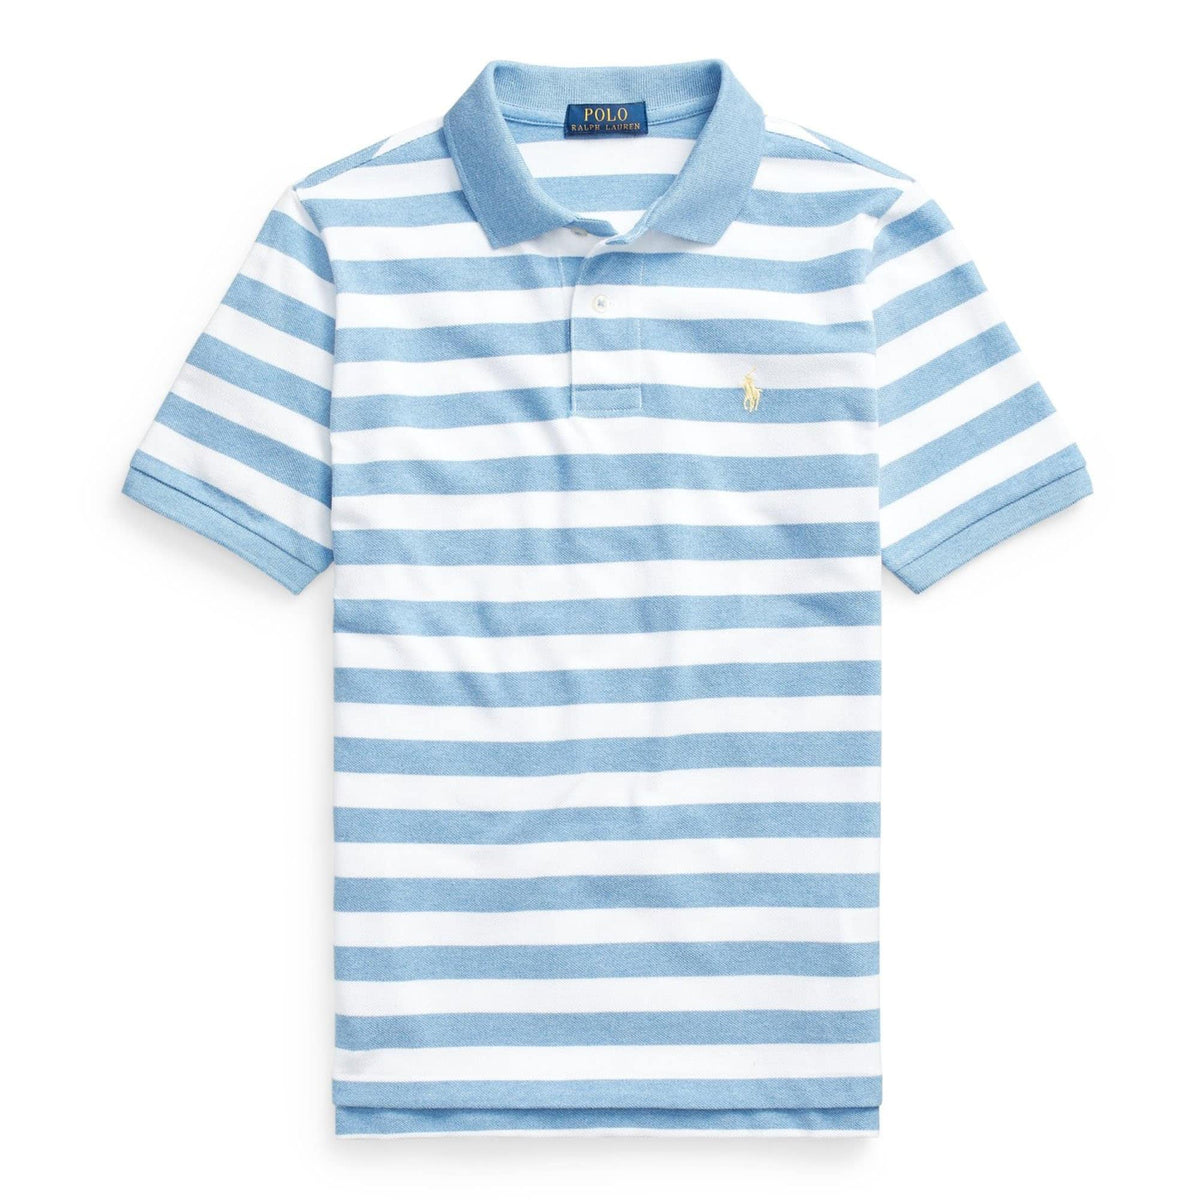 Polo Ralph Lauren Polo Shirts Boys Polo Ralph Lauren Blue Striped Polo Shirts